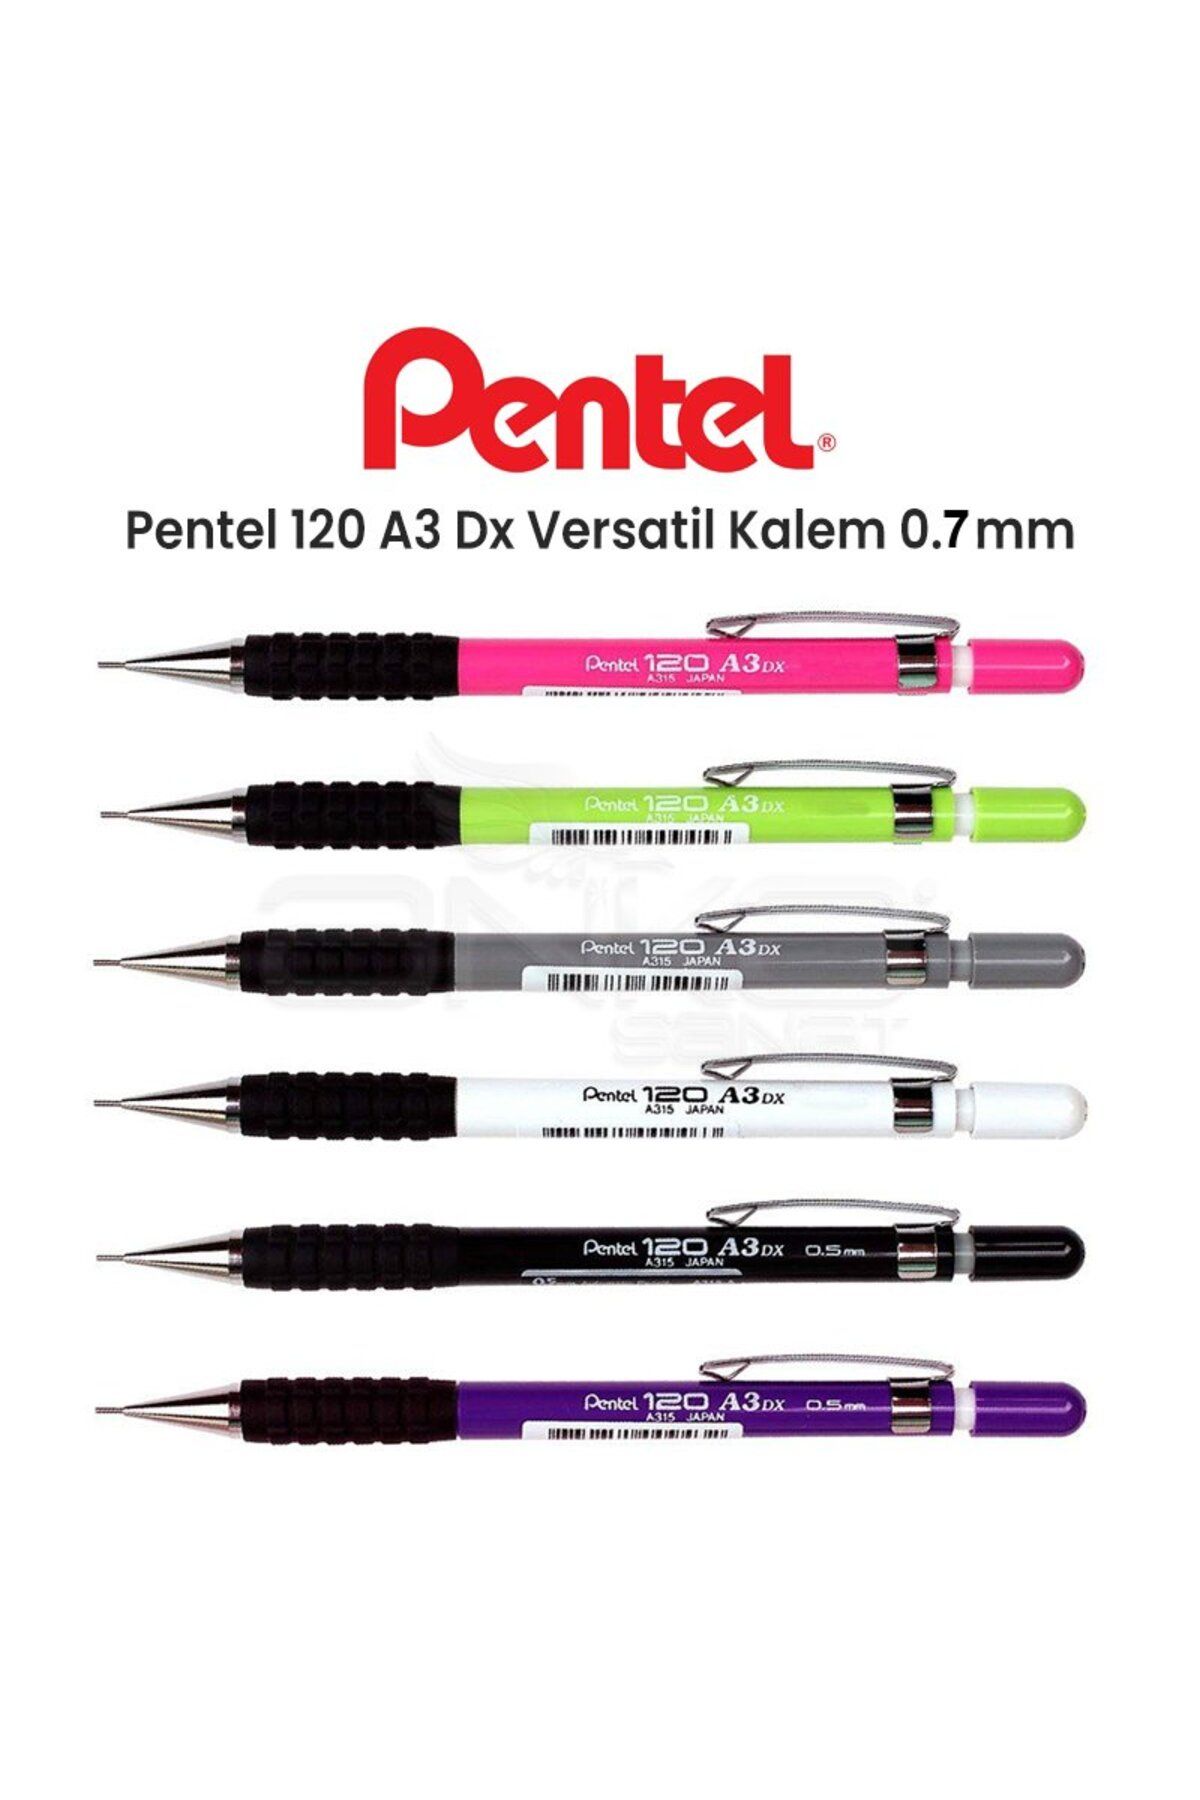 Pentel 120 A3 Dx Versatil Kalem 0.7mm